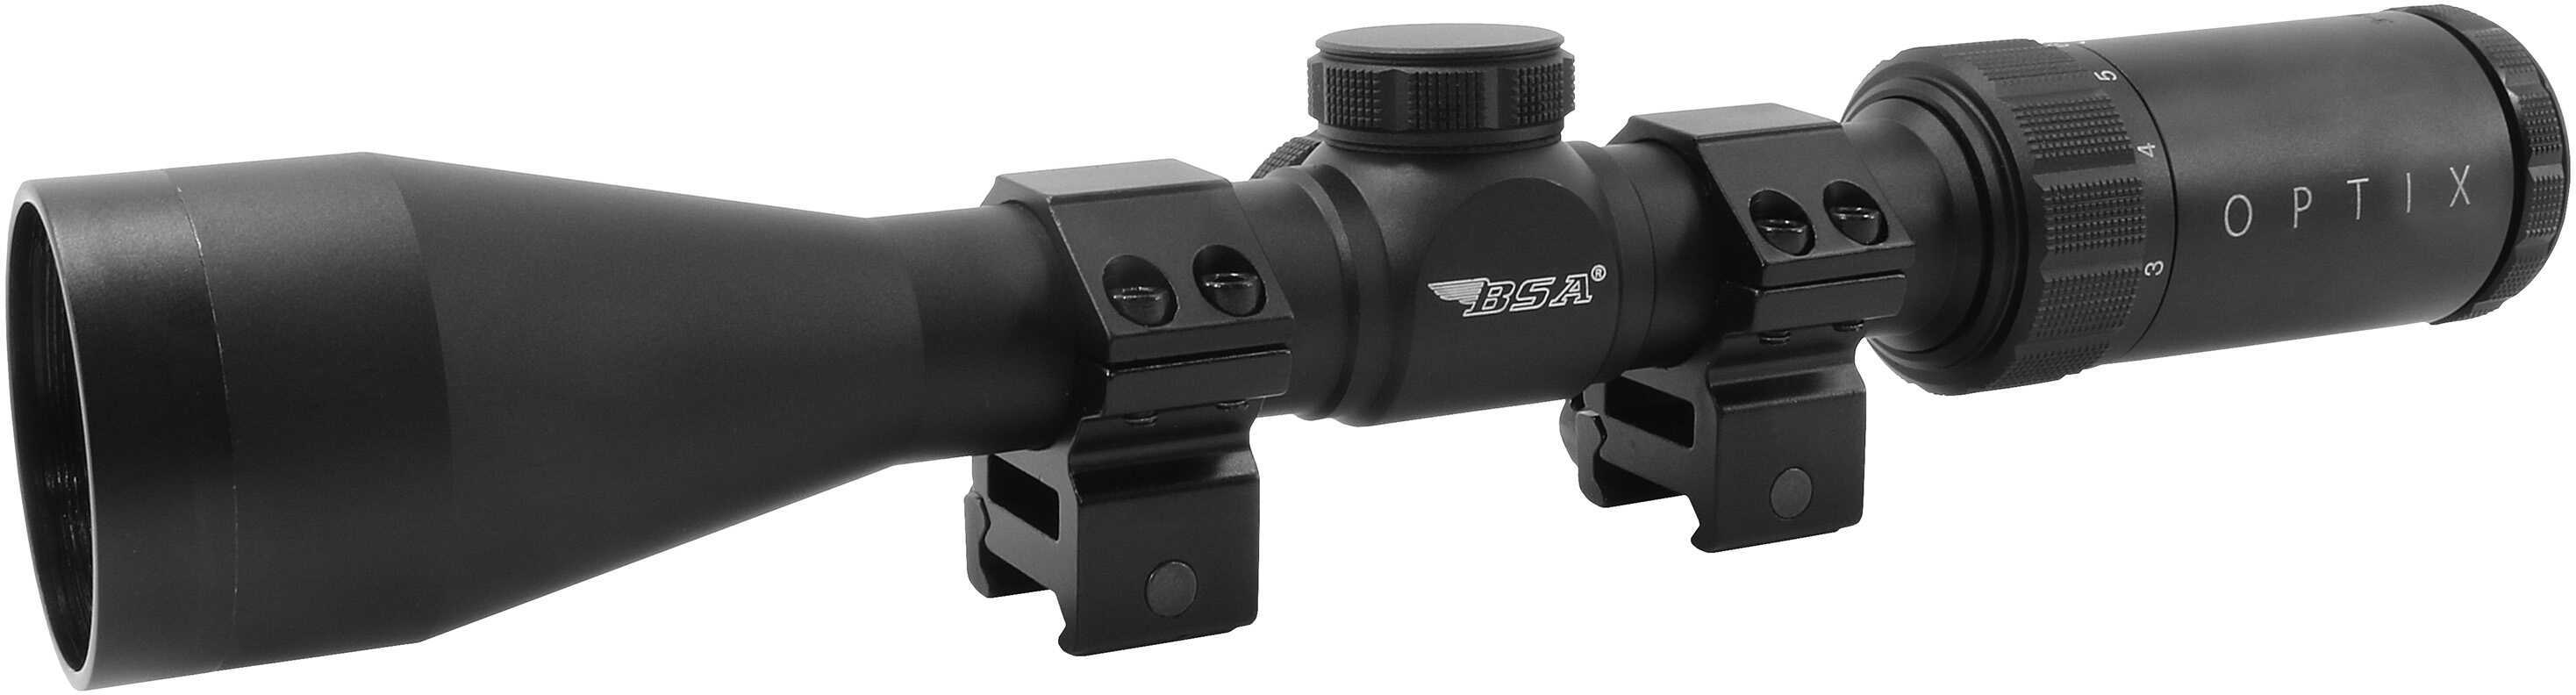 BSA Optics Optix Rifle Scope 3-9X40mm 1" Maintube BDC-8 Reticle Black Color HS3-9X40TB